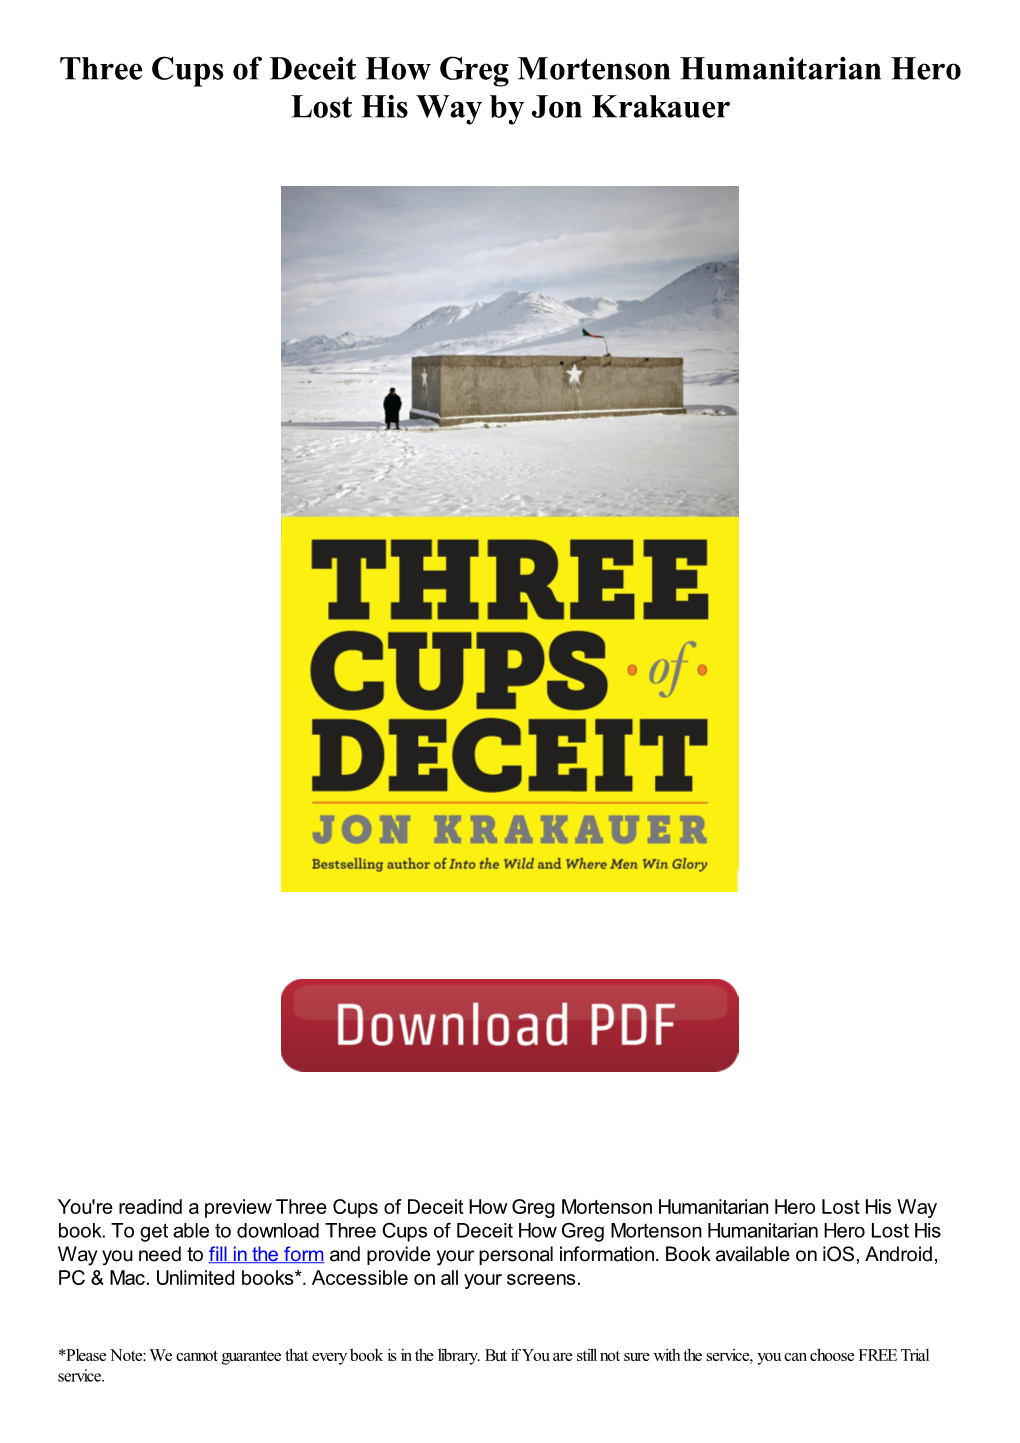 Three Cups of Deceit How Greg Mortenson Humanitarian Hero Lost His Way by Jon Krakauer